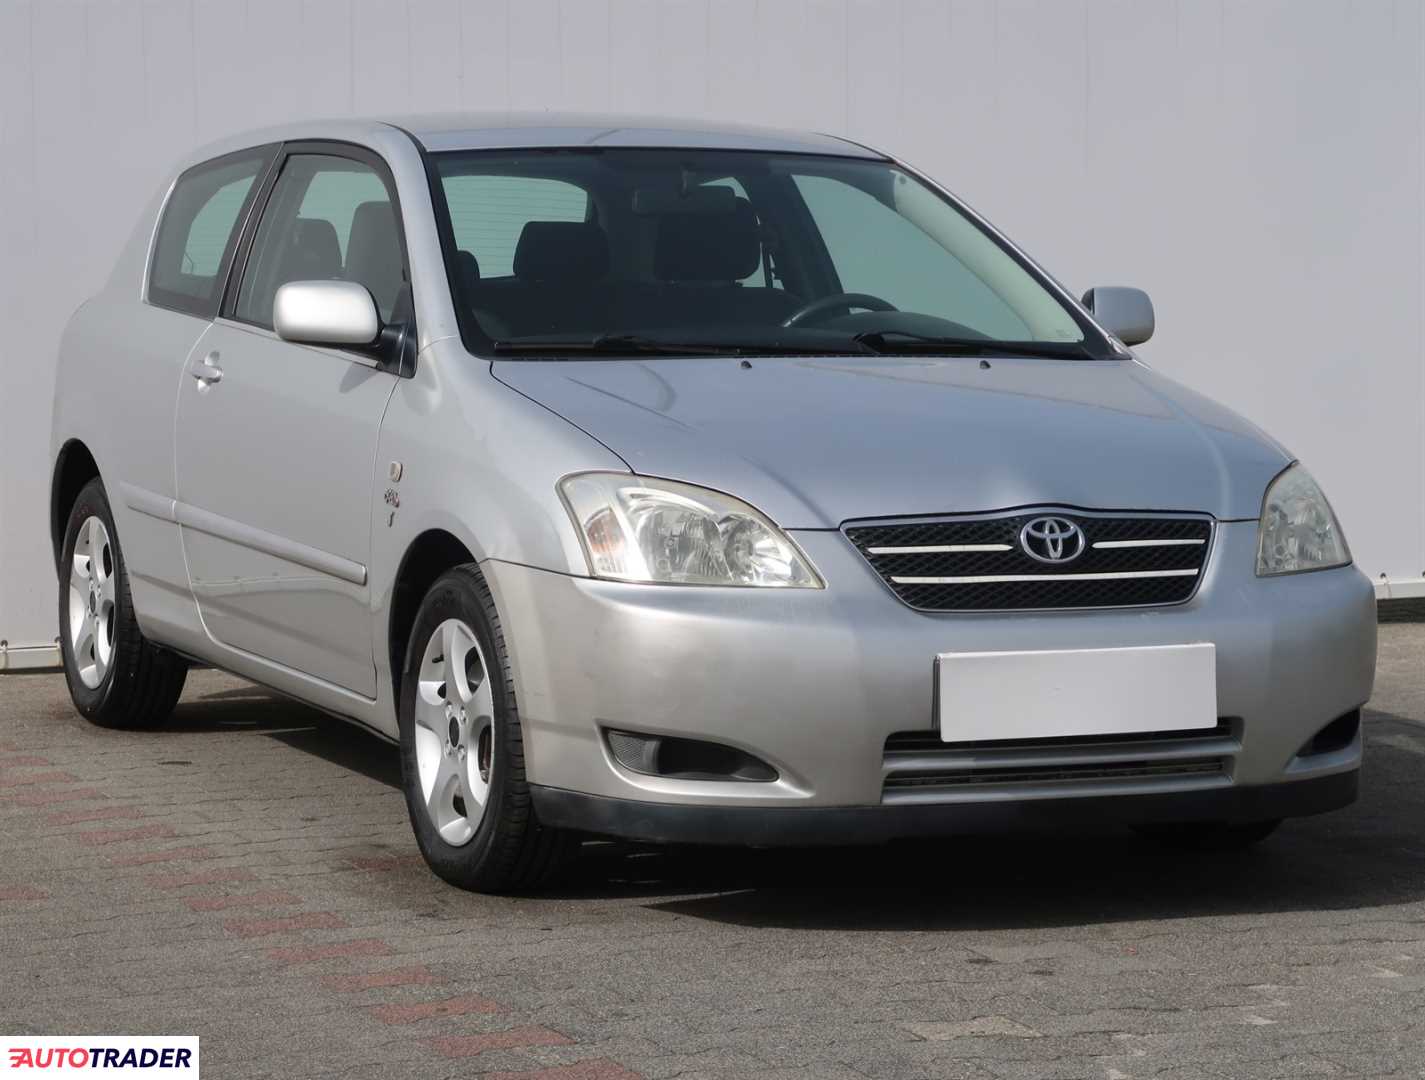 Toyota Corolla 2003 2.0 113 KM